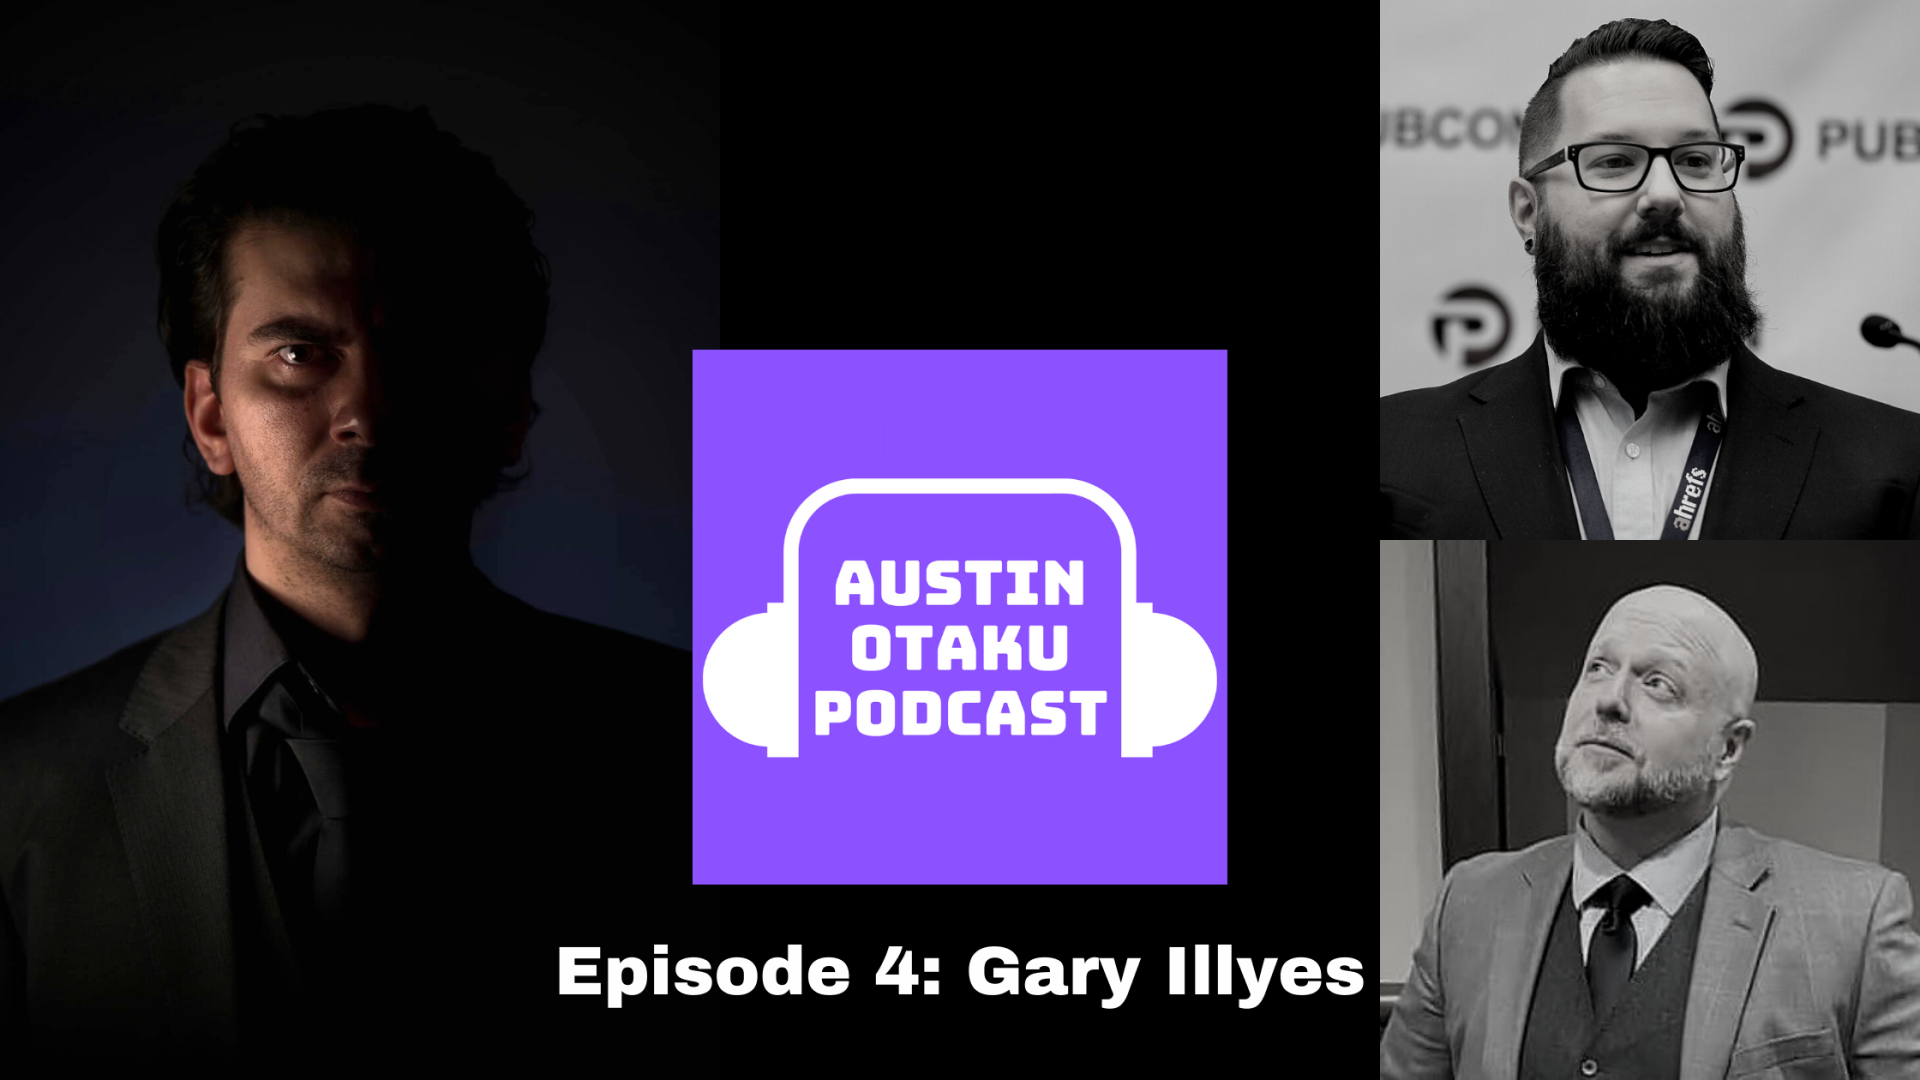 Episode 4 - Gary Illyes